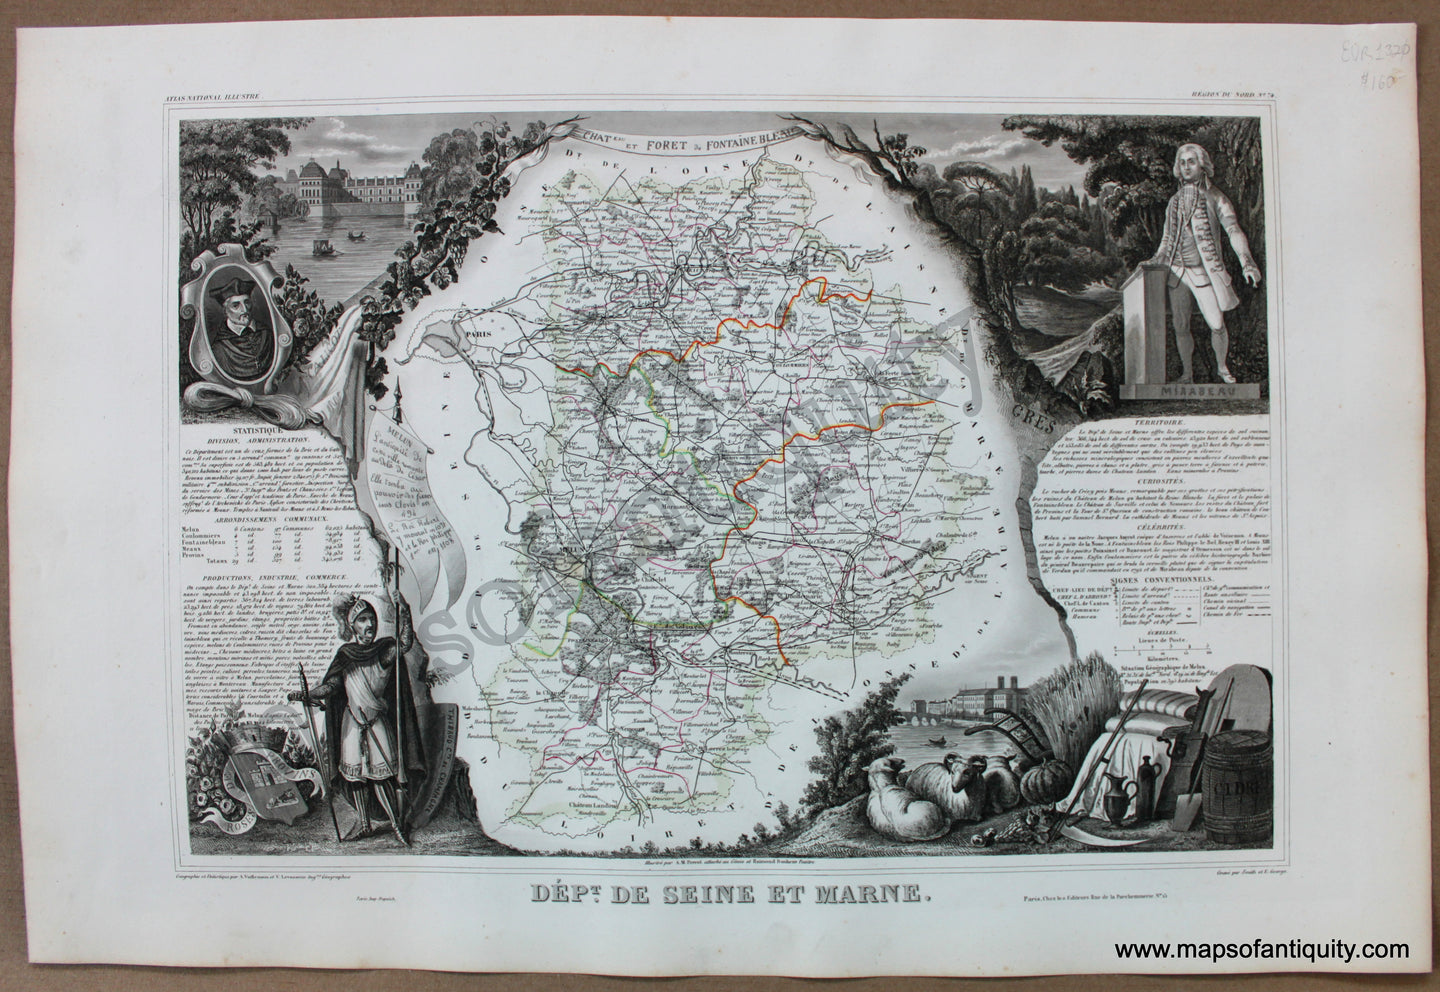 Antique-Hand-Colored-Map-1851-Levasseur-France-Dept.-de-Seine-et-Marne.-France